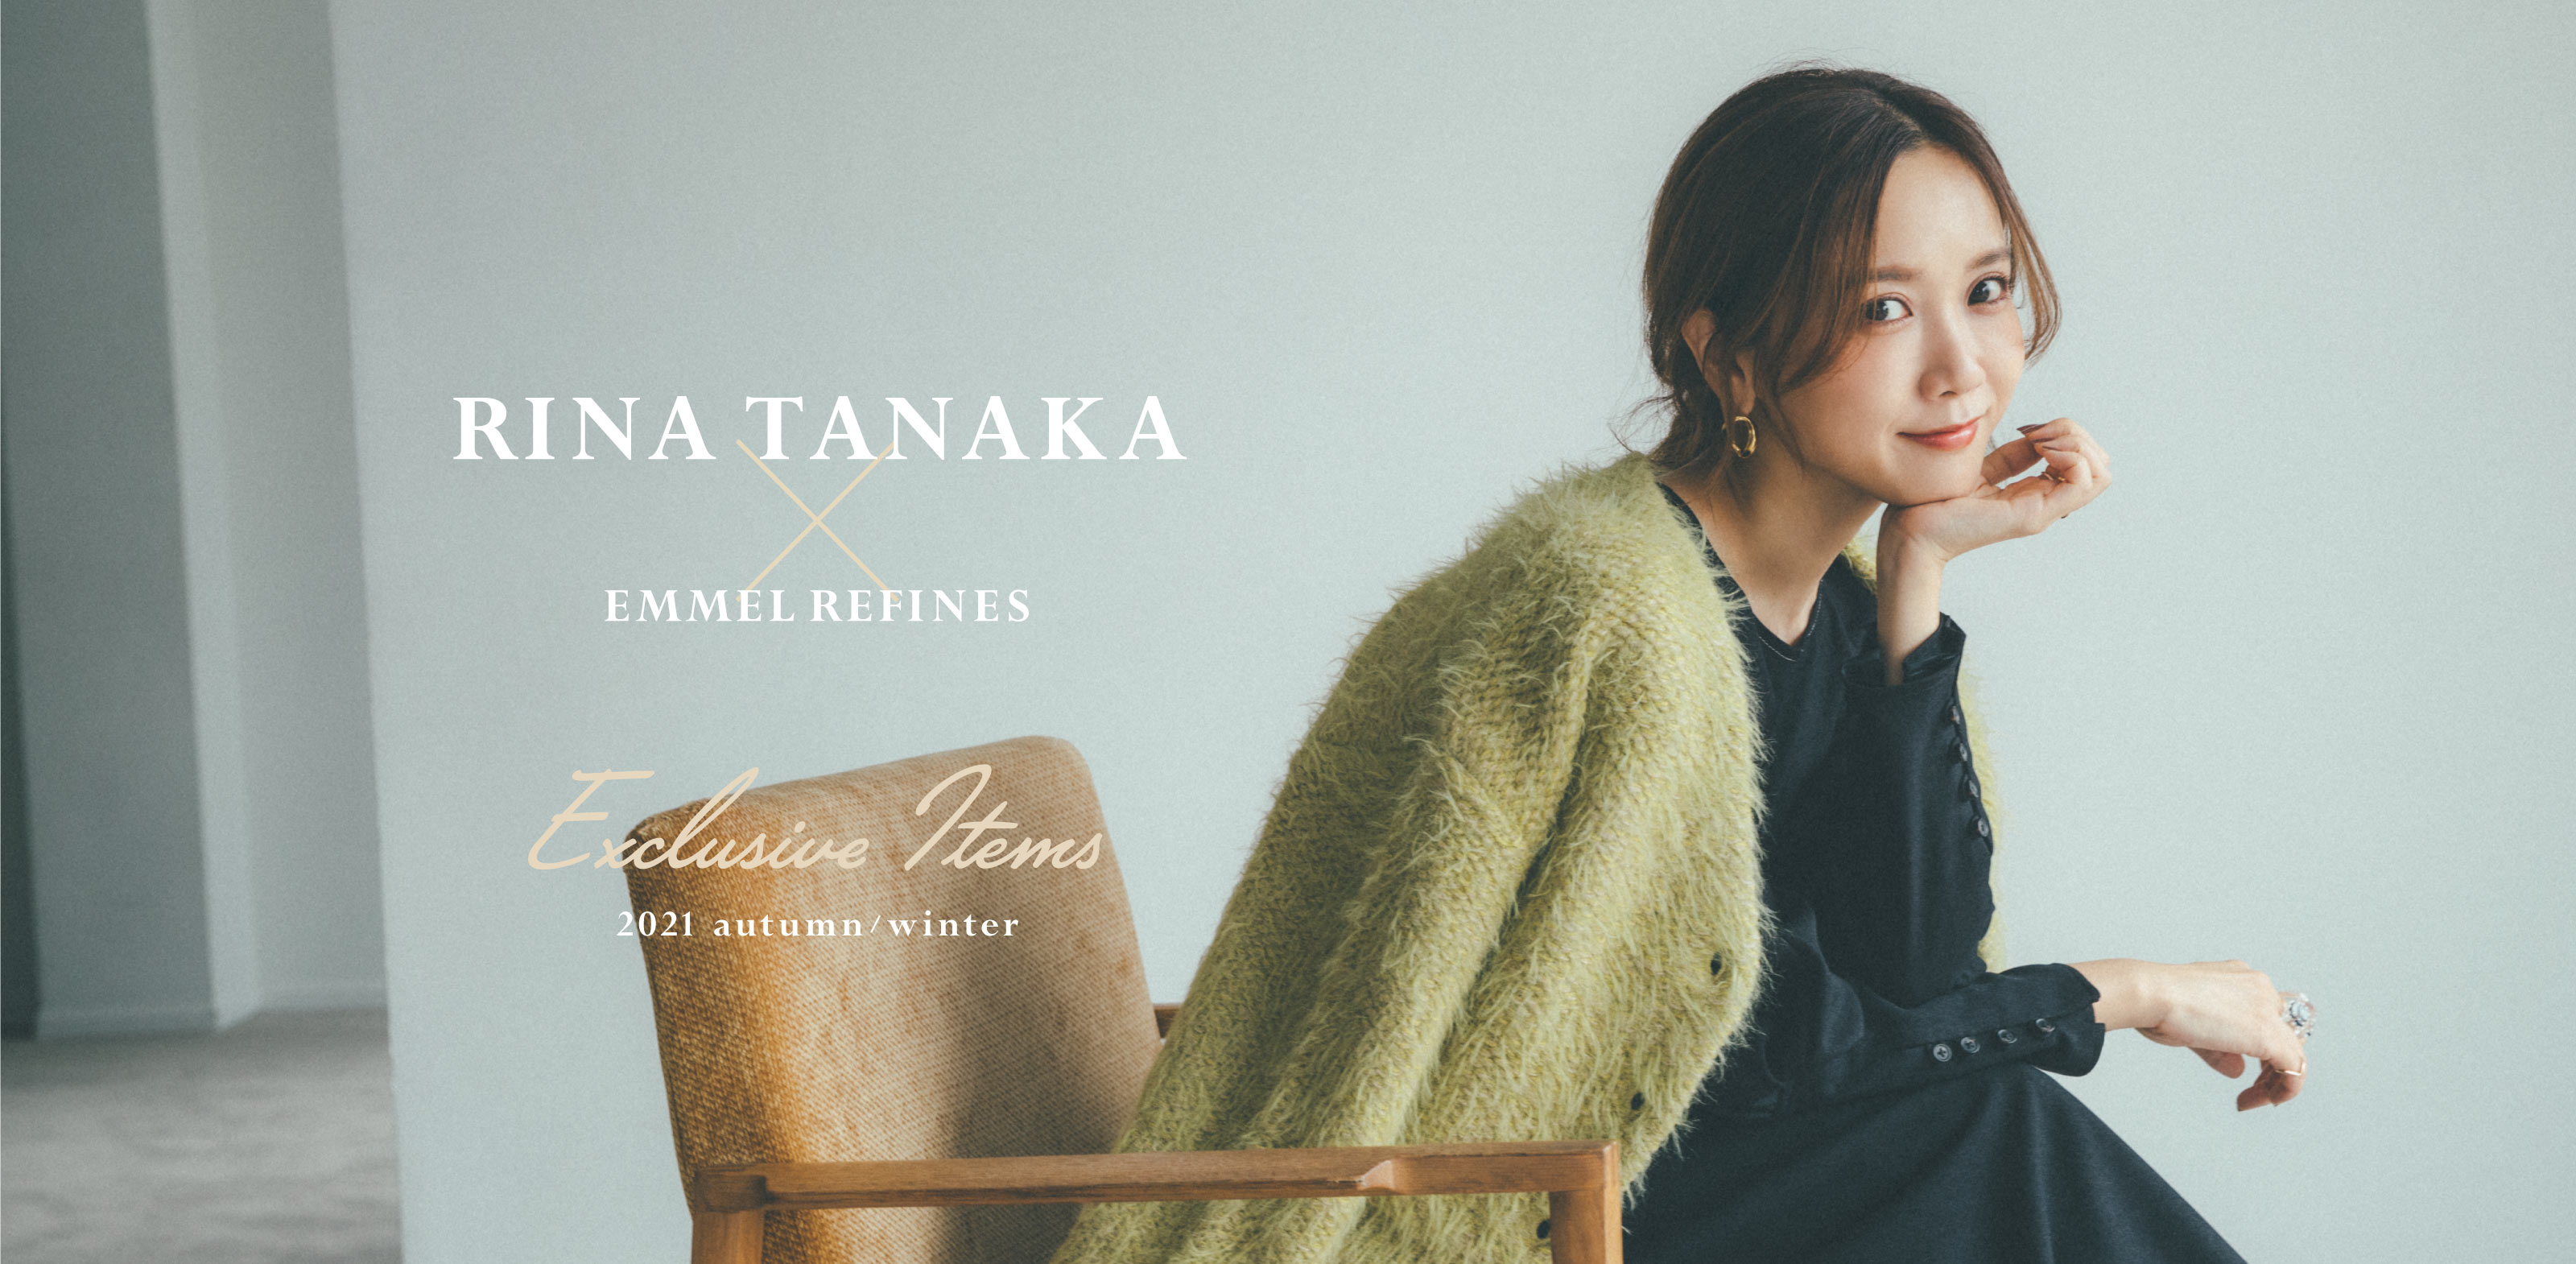 EMMEL REFINES × RINA TANAKA Exclusive items